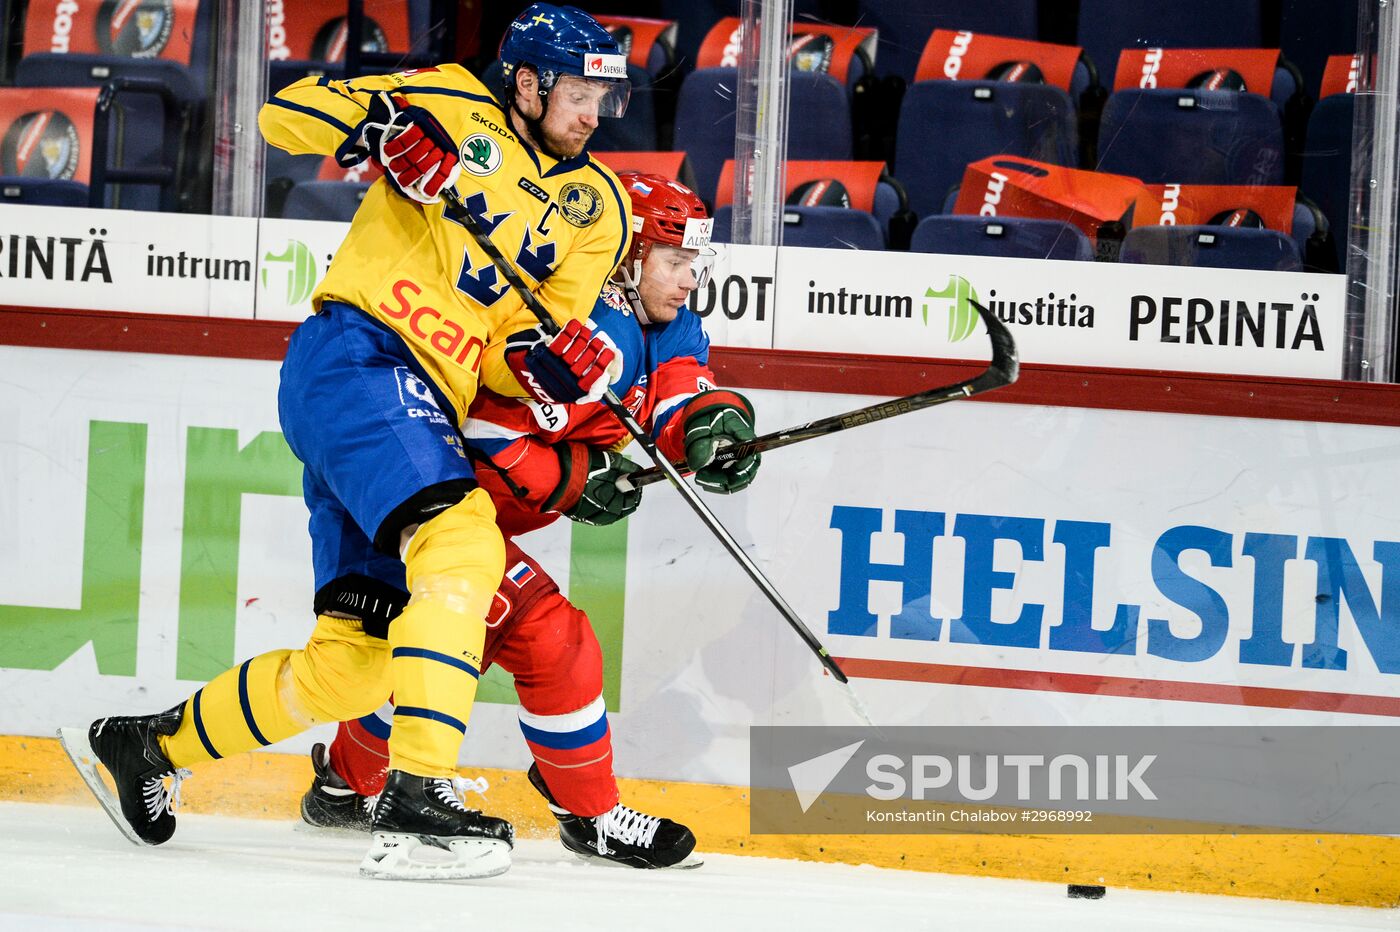 Karjala Ice Hockey Tournament 2016. Sweden vs. Russia